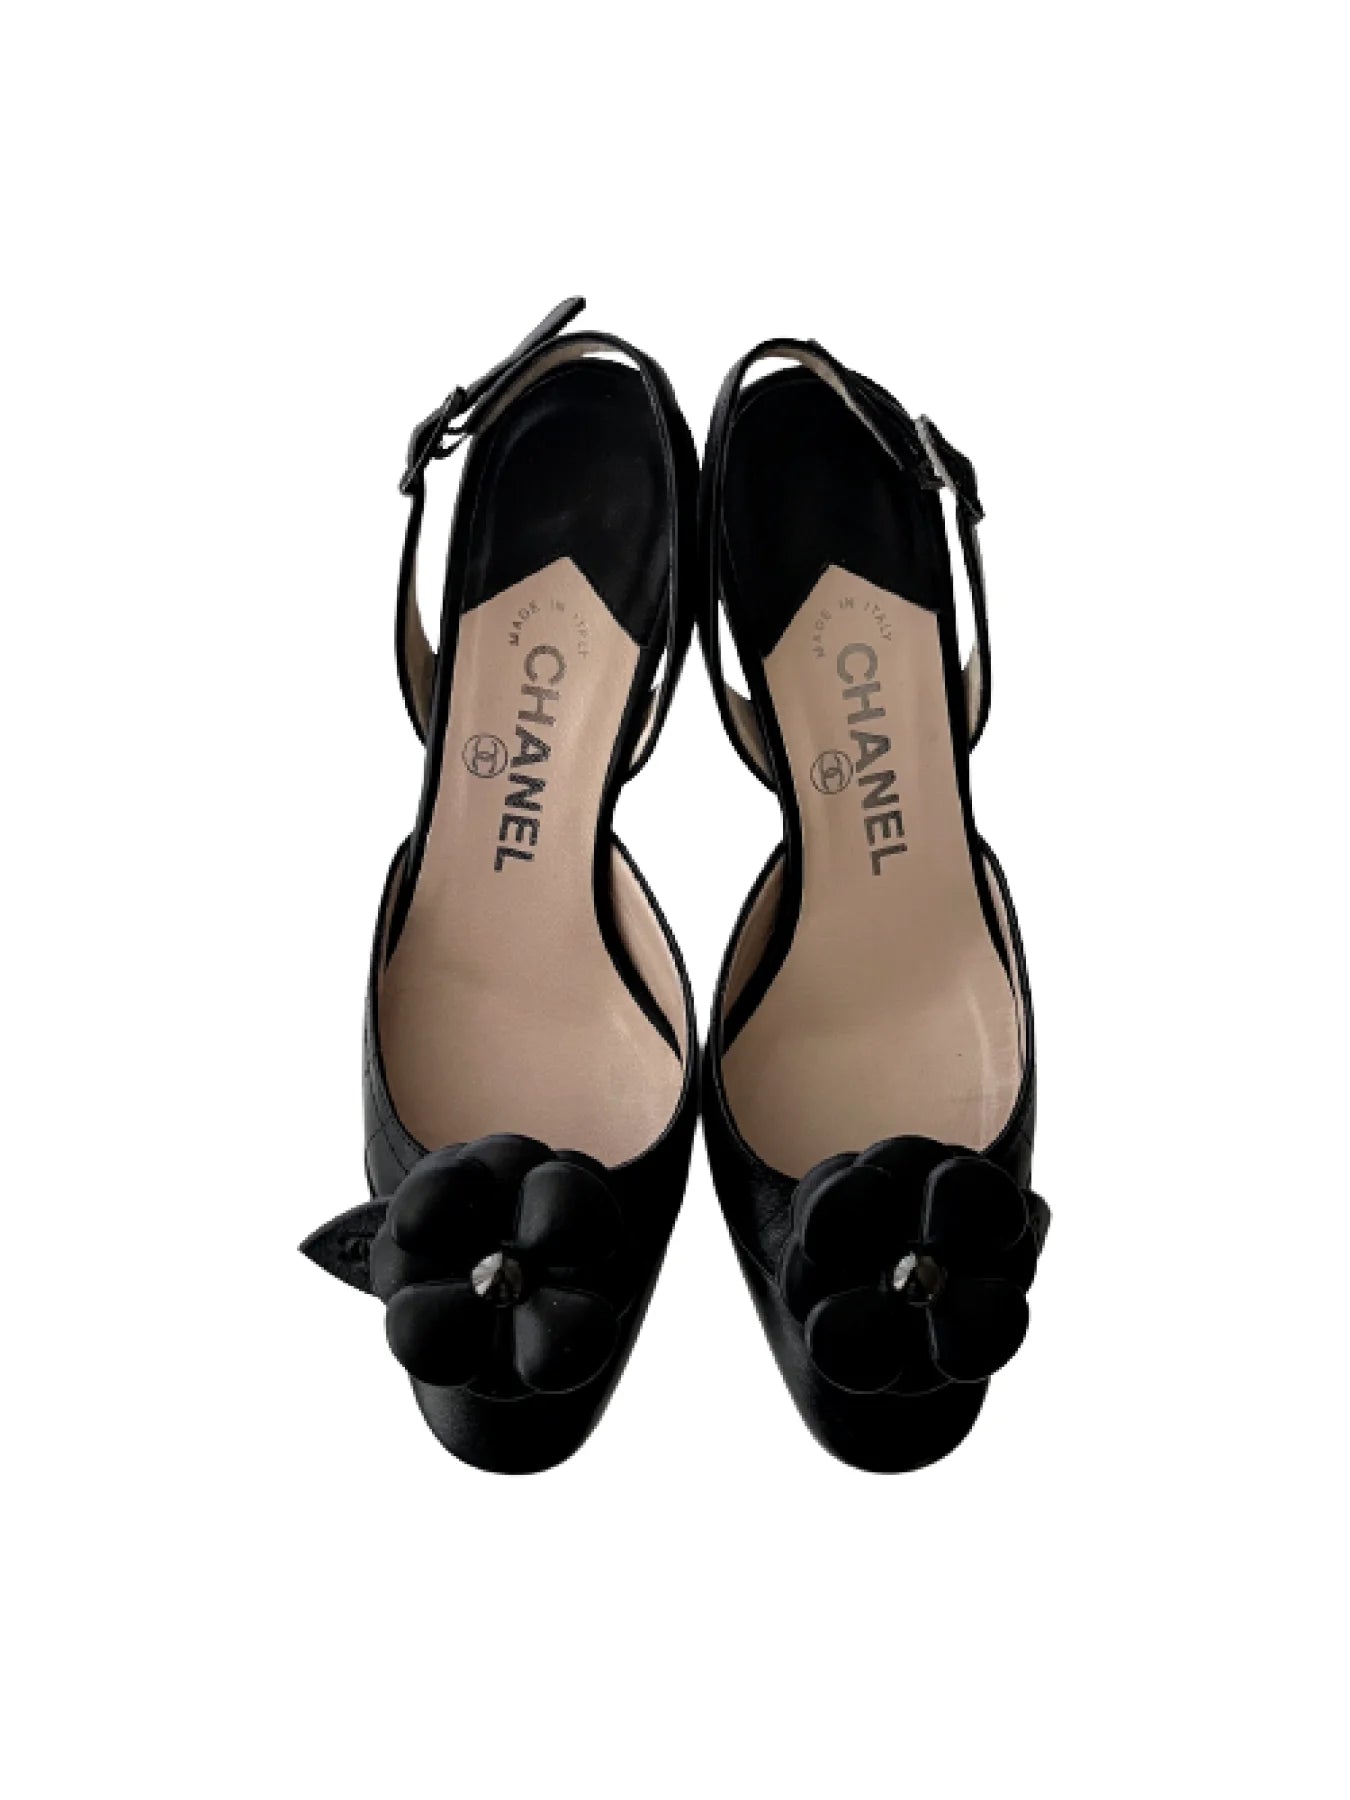 Chanel Sling-backs w/Camellia Flowers Sandals, 36.5